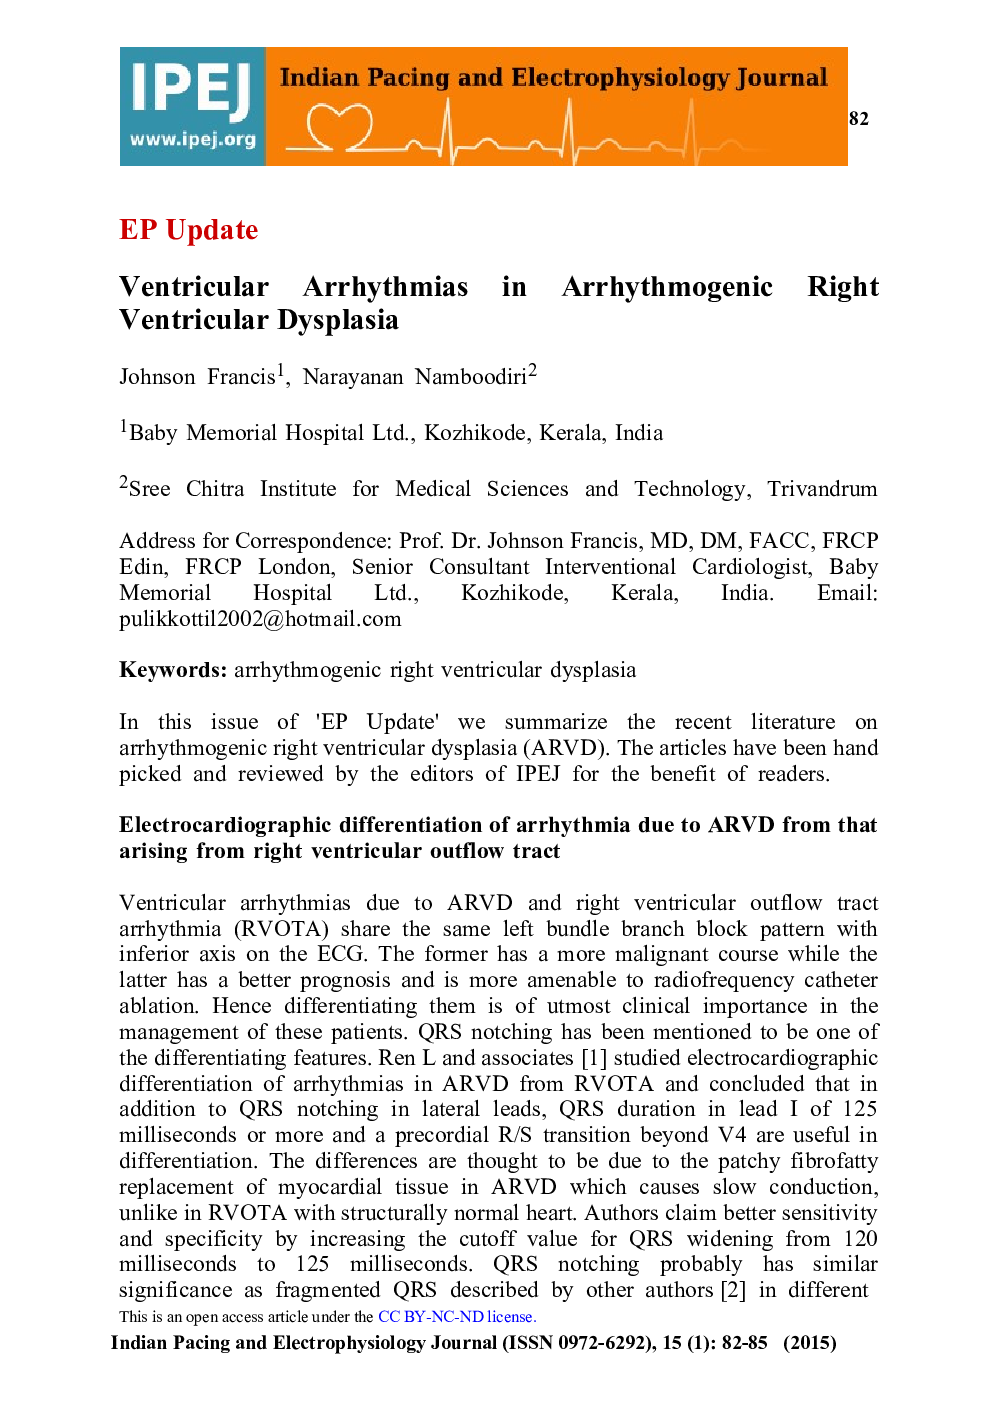 Ventricular Arrhythmias in Arrhythmogenic Right Ventricular Dysplasia